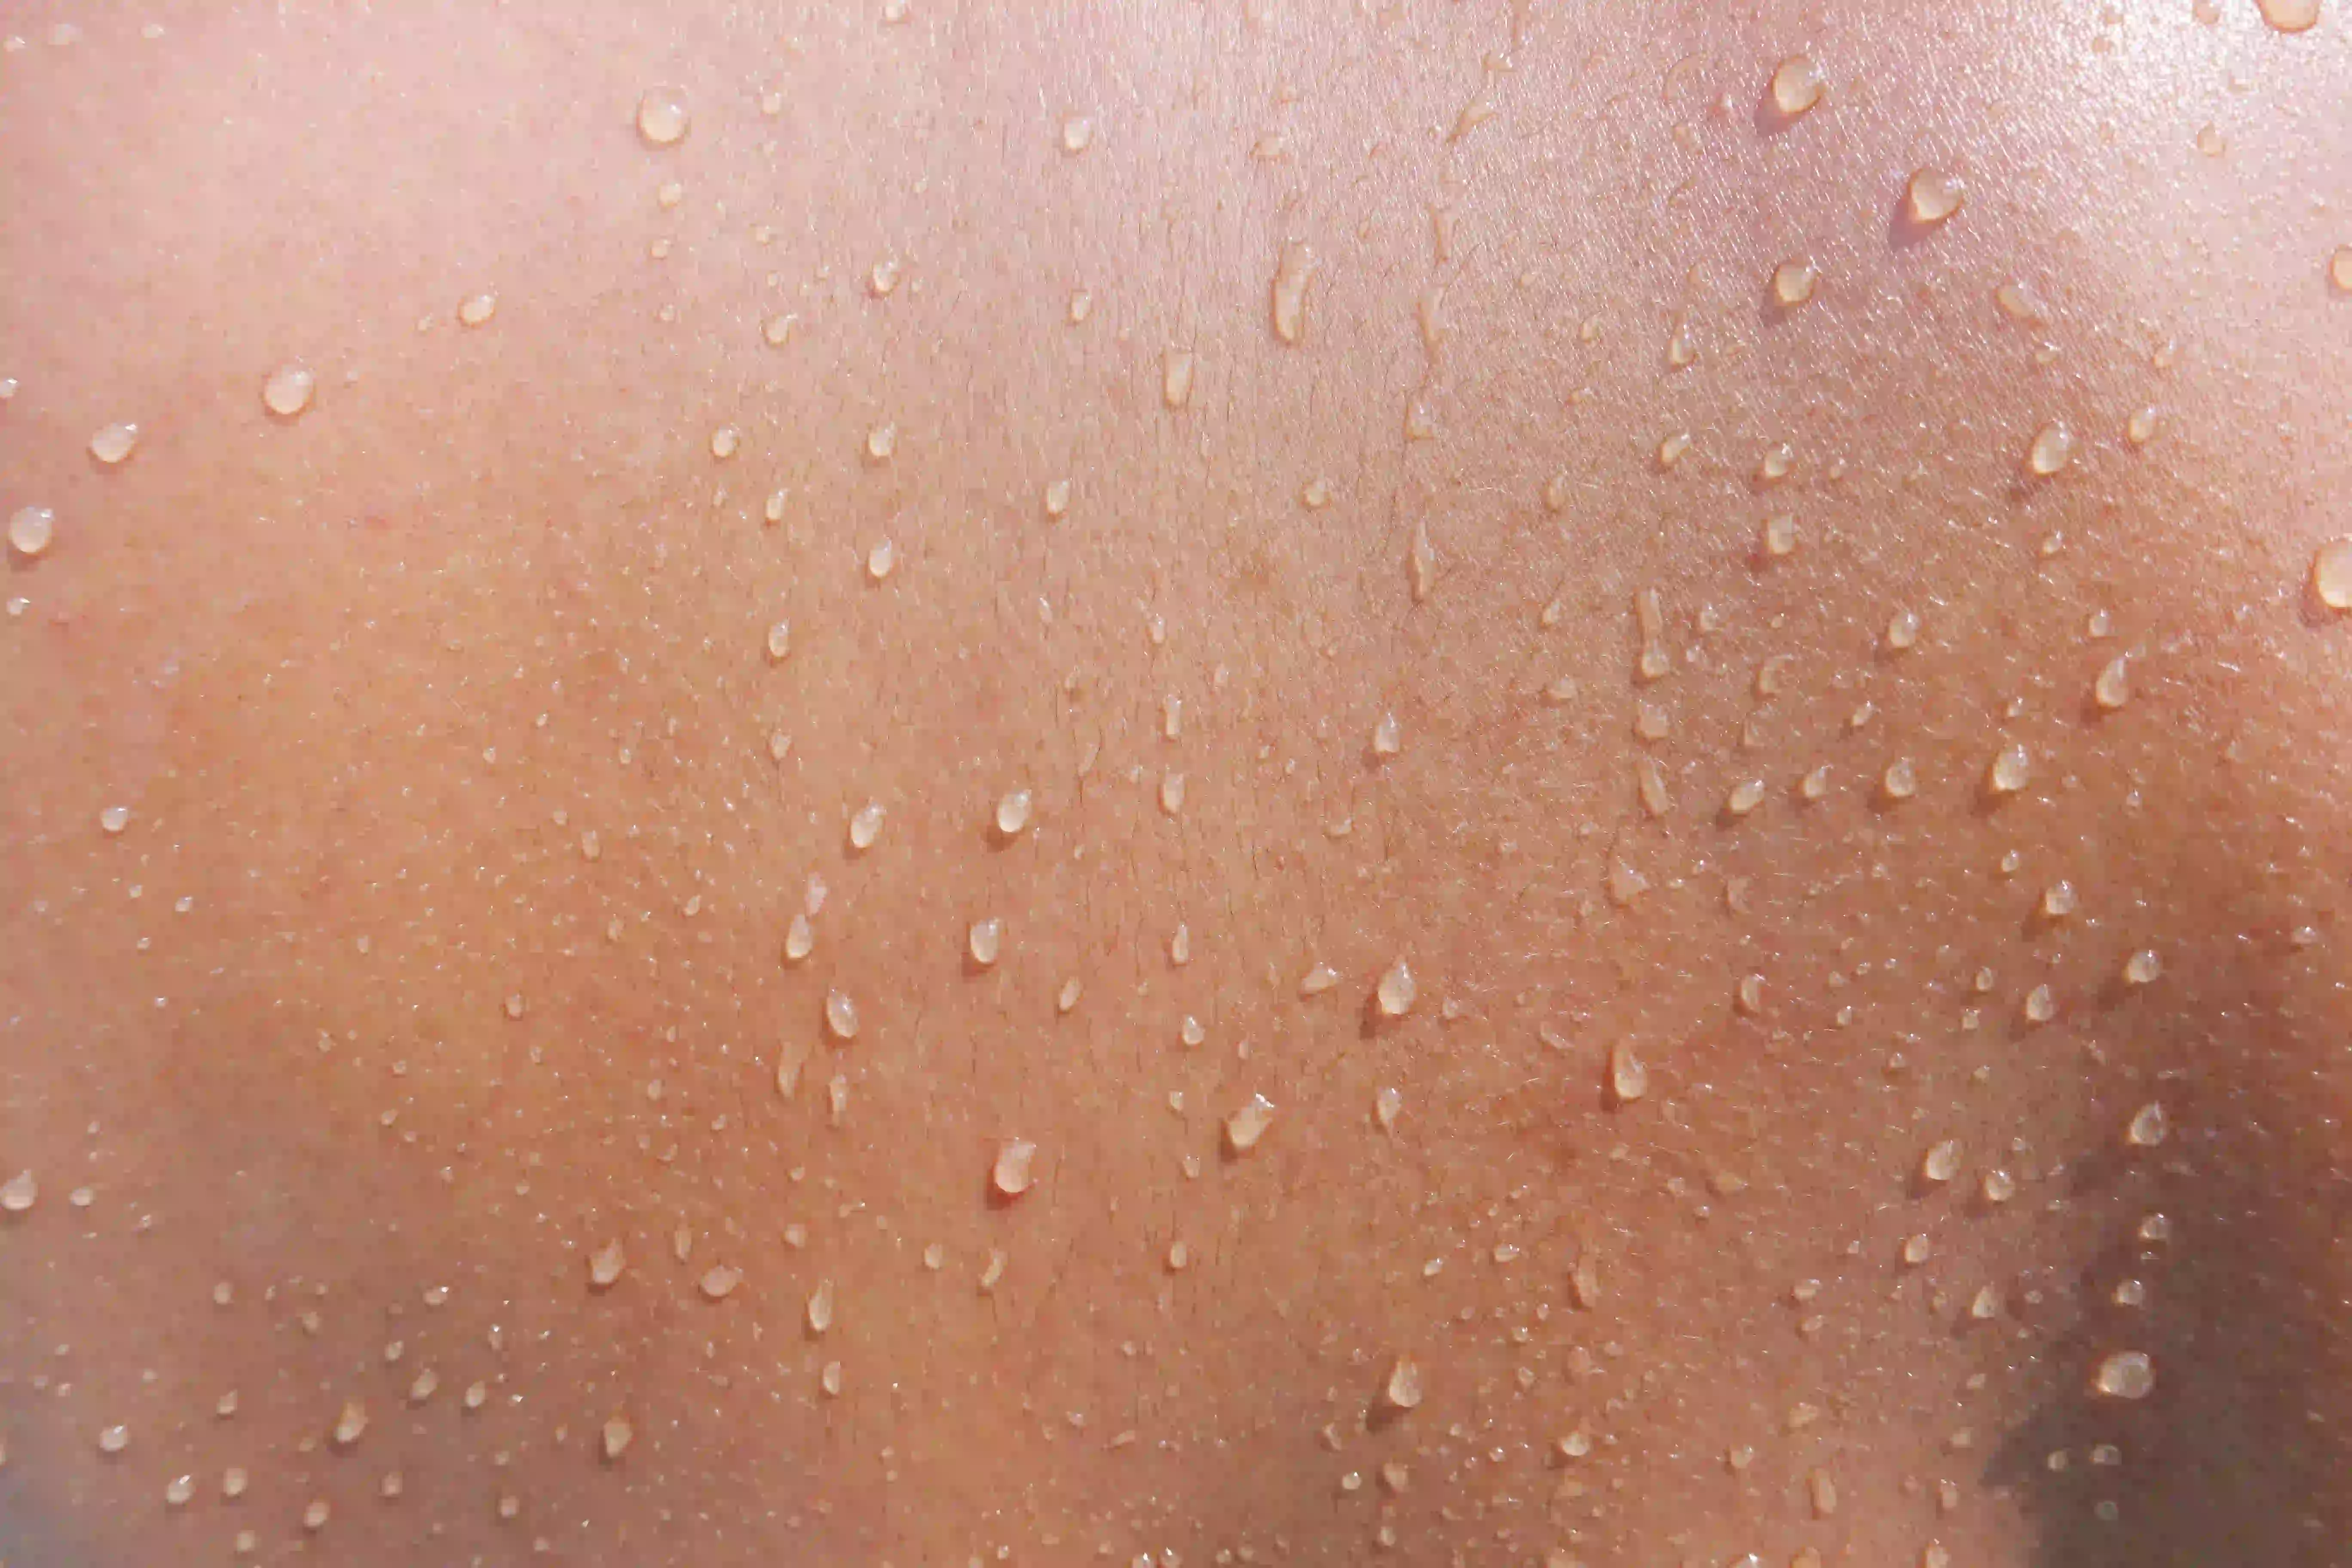 Sweaty skin